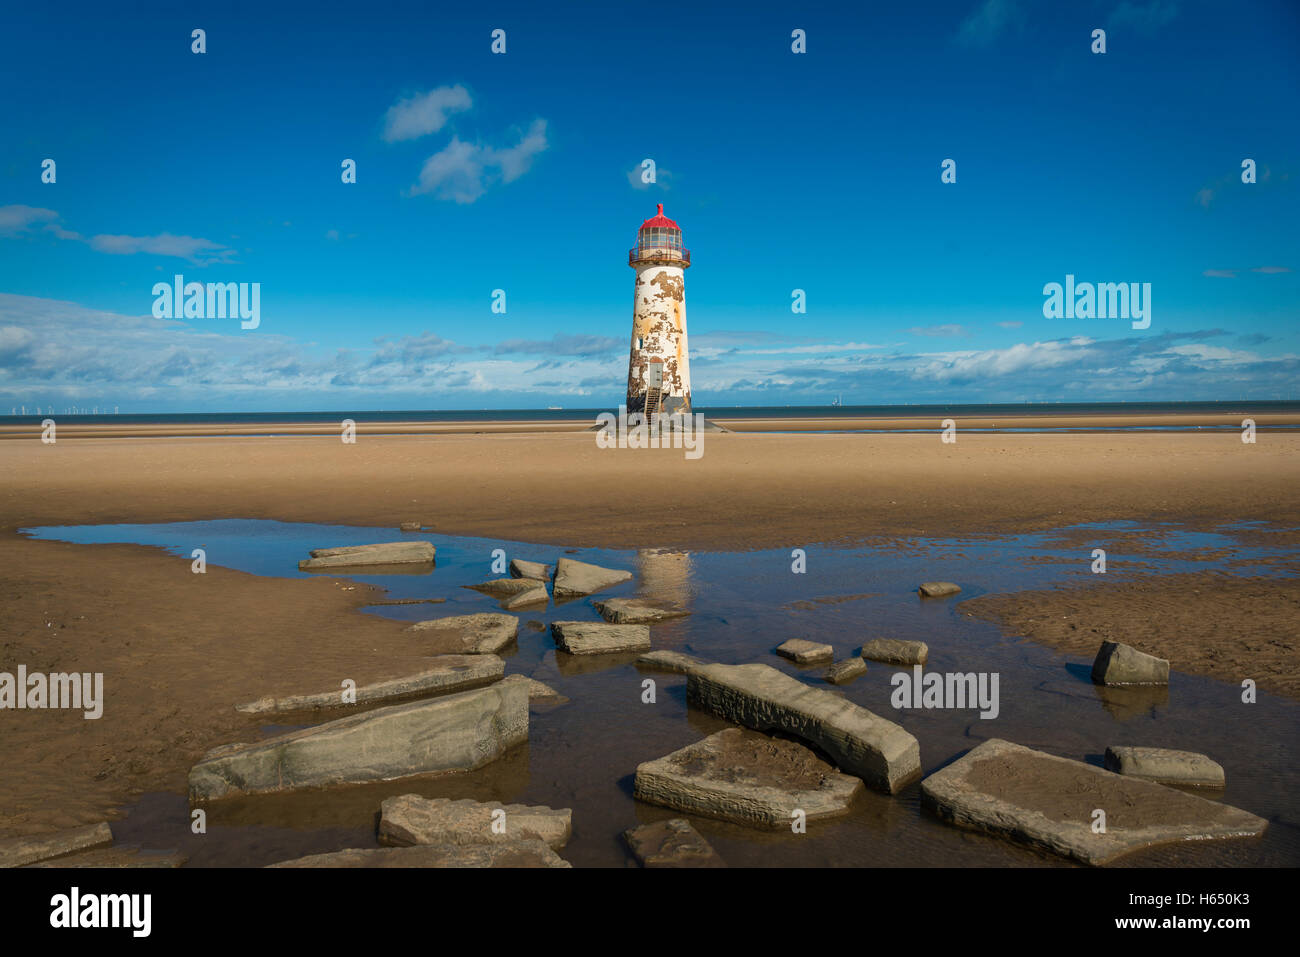 Punkt von Ayr Leuchtturm, Talacre Beach, North Wales, UK. Foto: Brian Hickey/Alamy Stockfoto